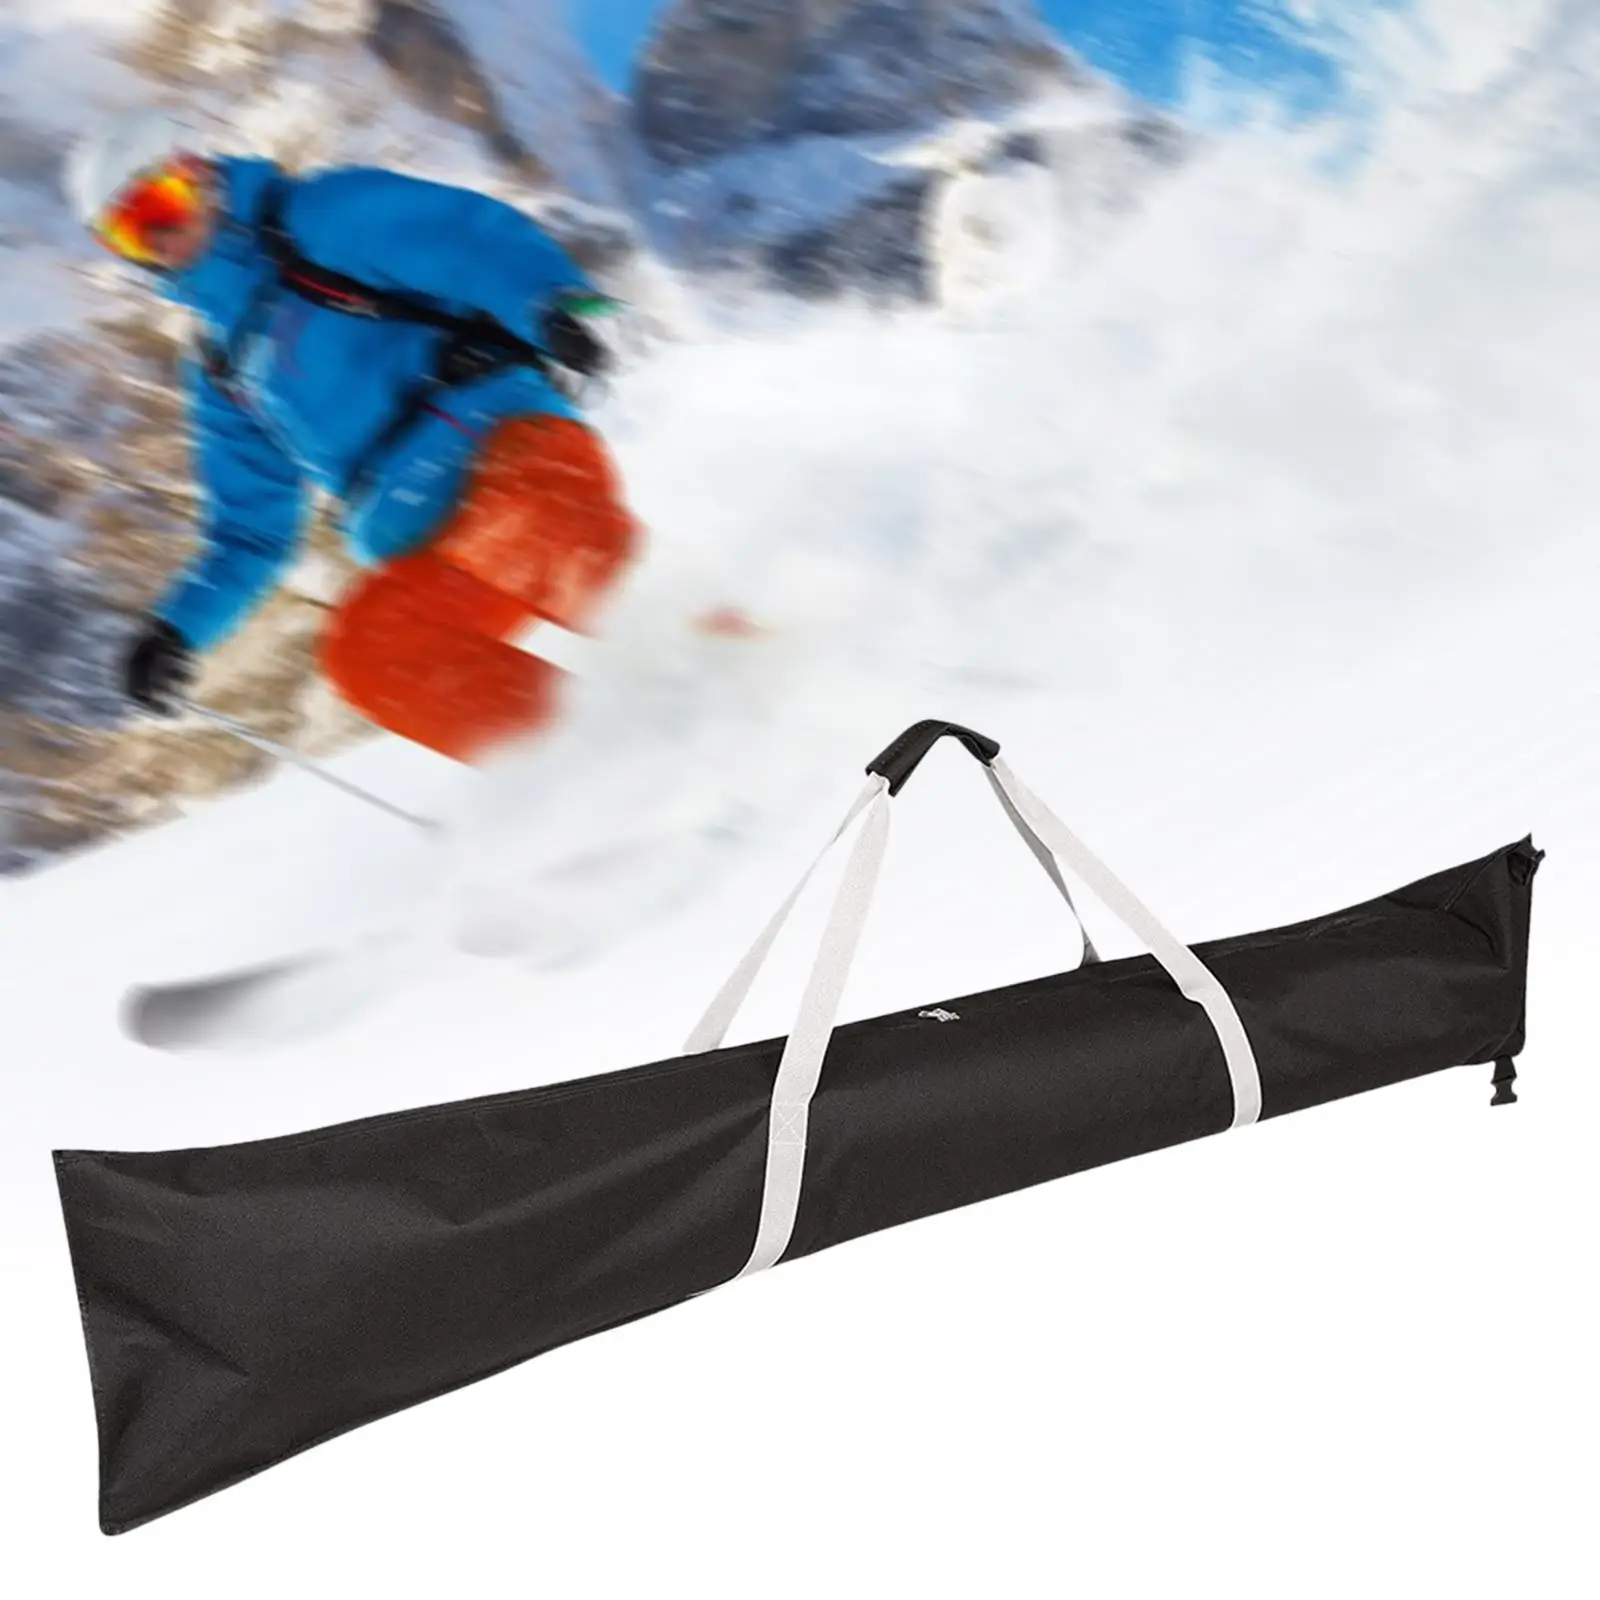 Ski Bag with Handle Transport Skis Gear Adjustable Men Women Snowboards Poles Bag for Skiing Outdoor Winter Sports Gloves